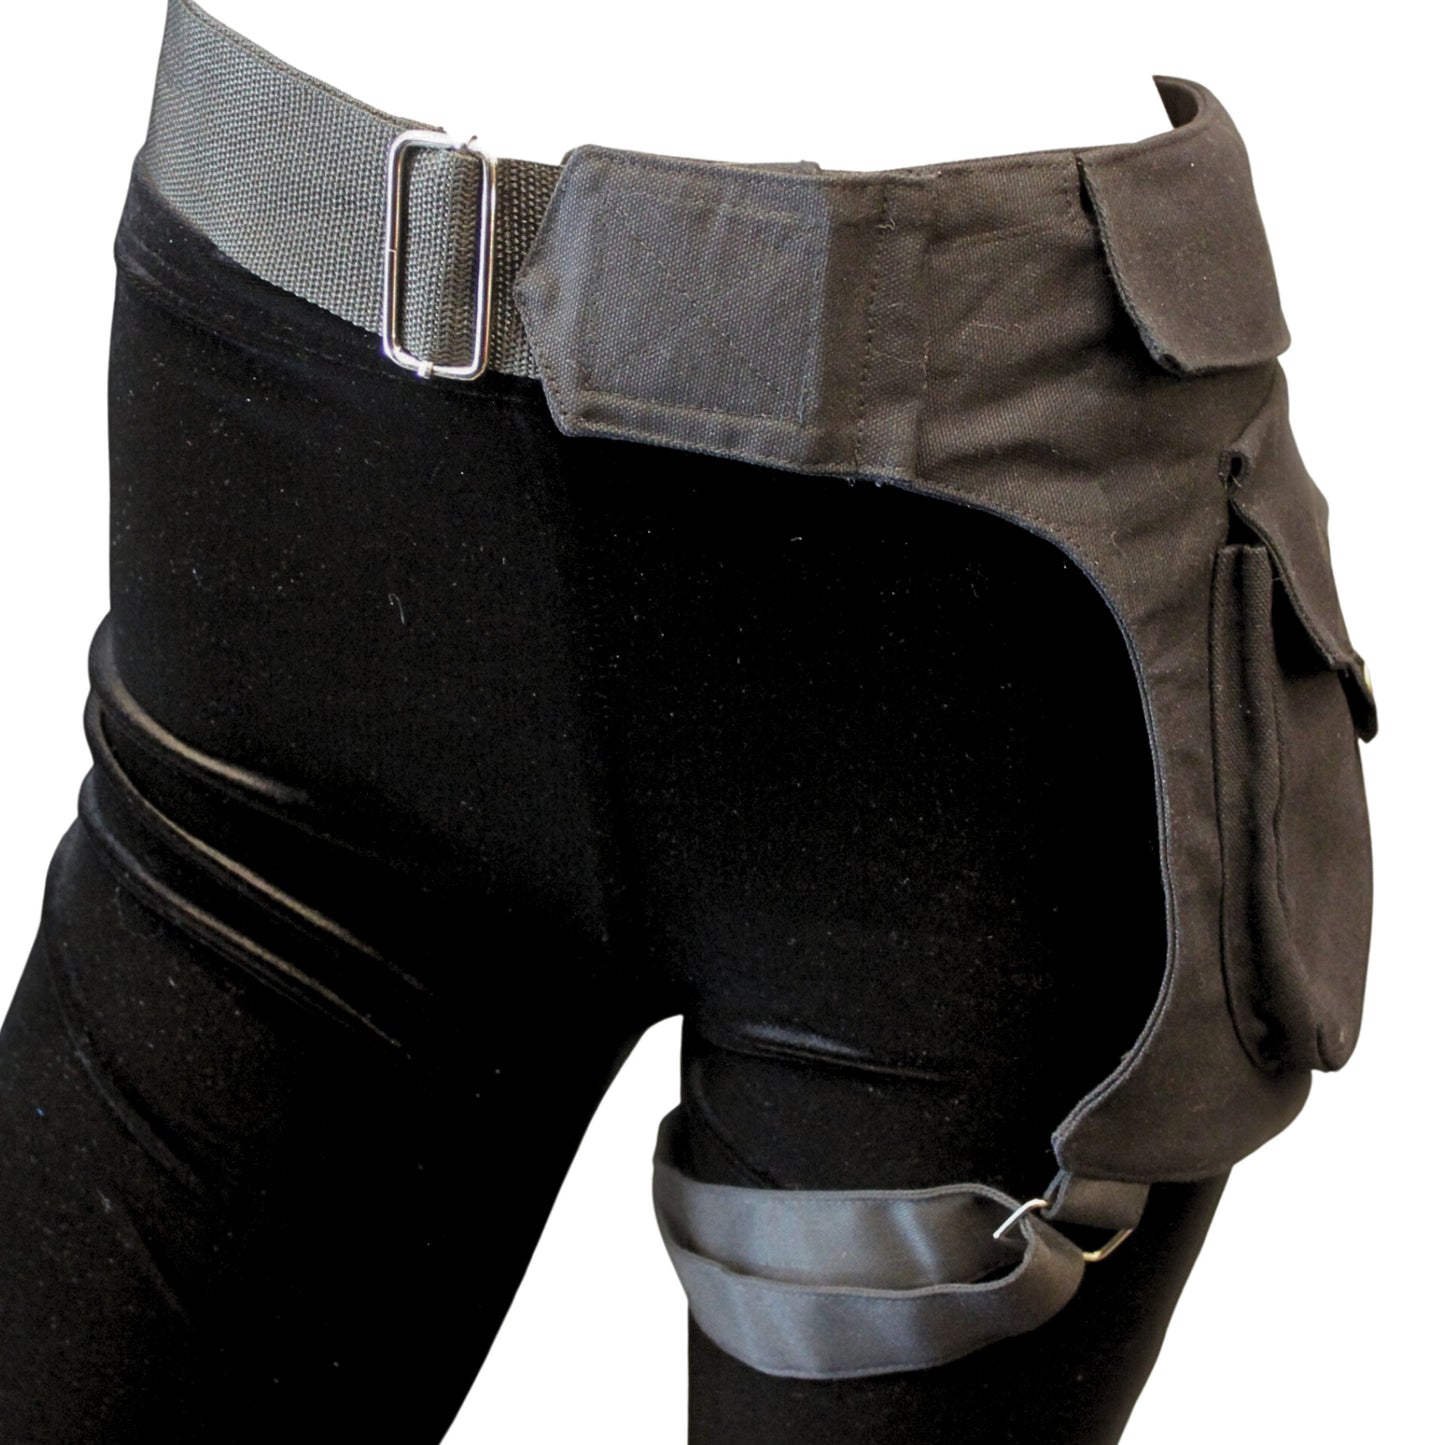 The VM Pocket Belt with Thigh Strap